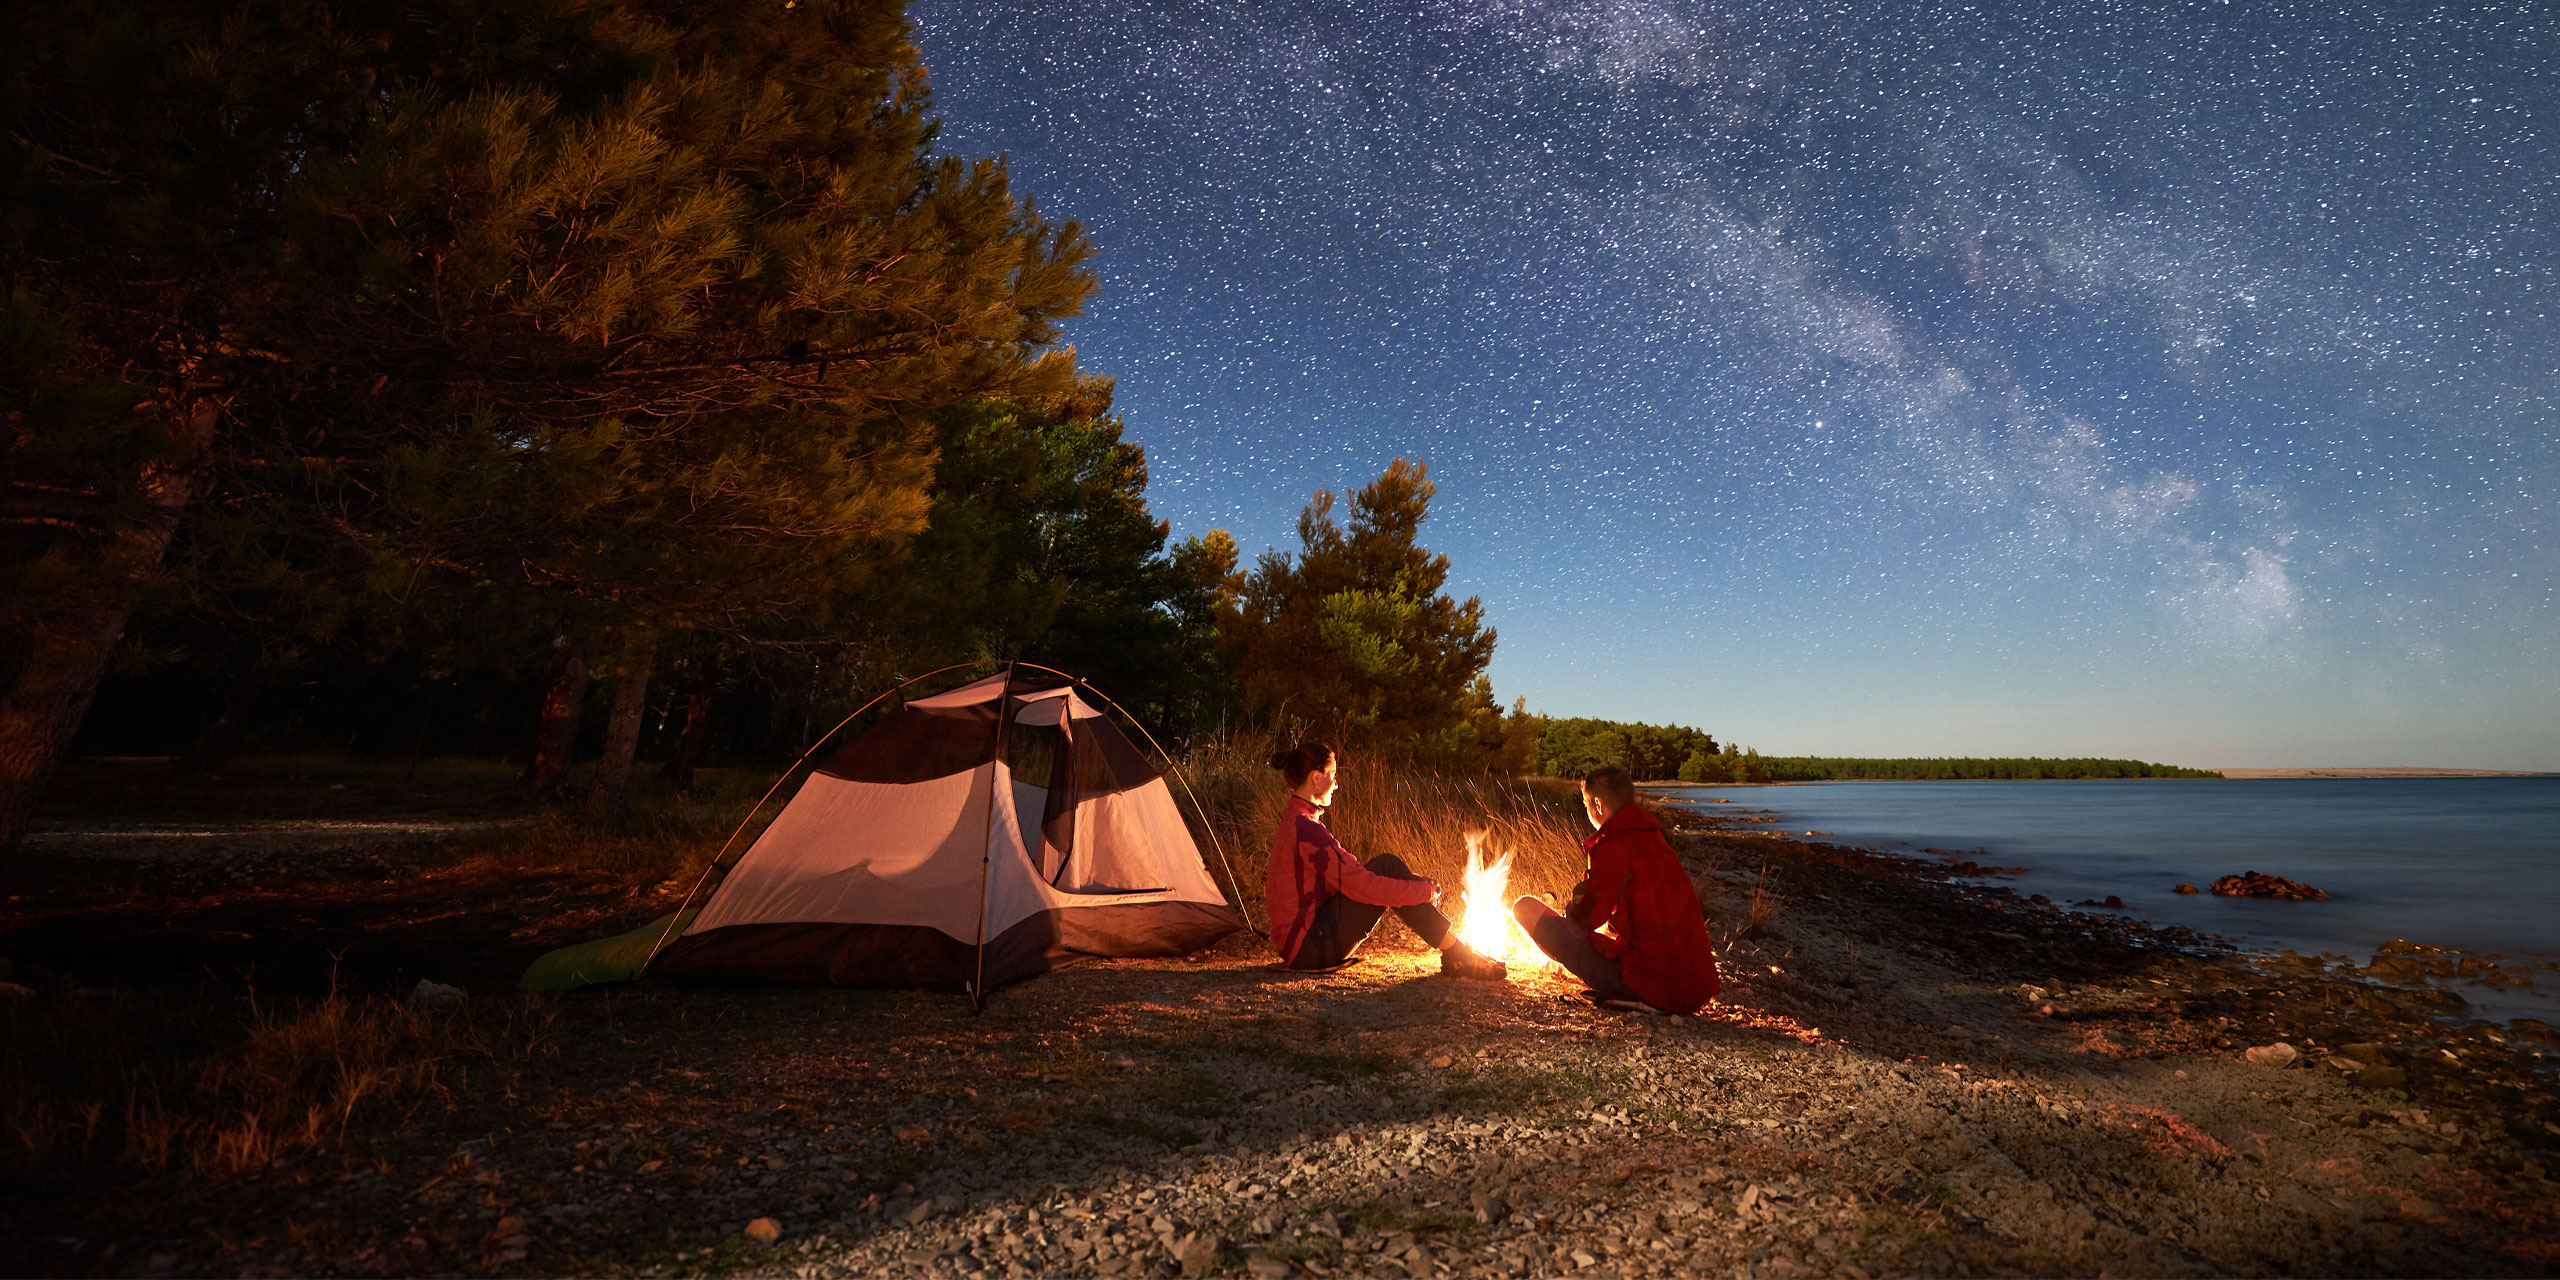 Camping At Night; Courtesy of anatoliy_gleb/Shutterstock.com